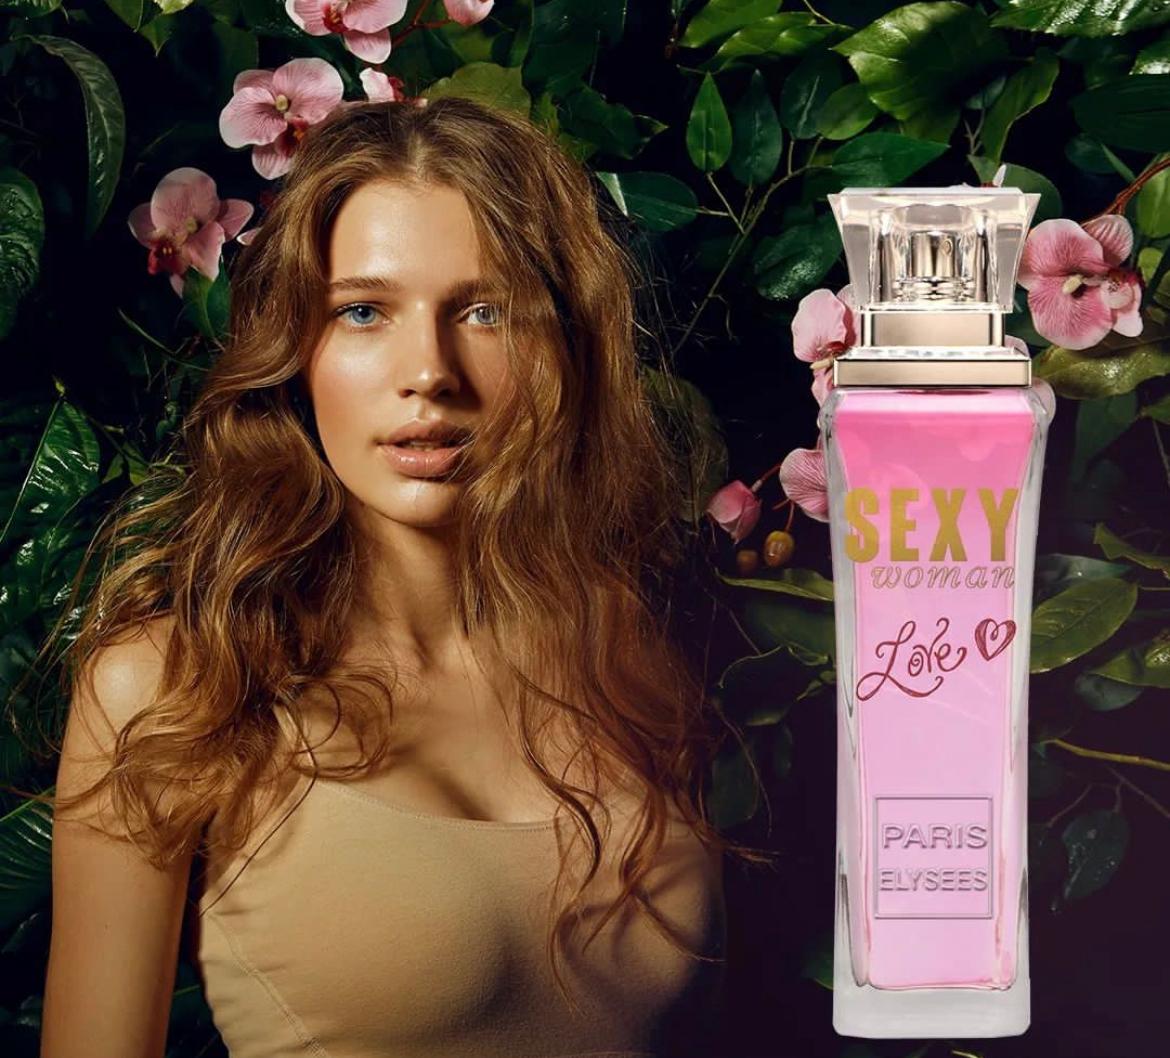 Sexy Woman Love Perfume For Women 100ml